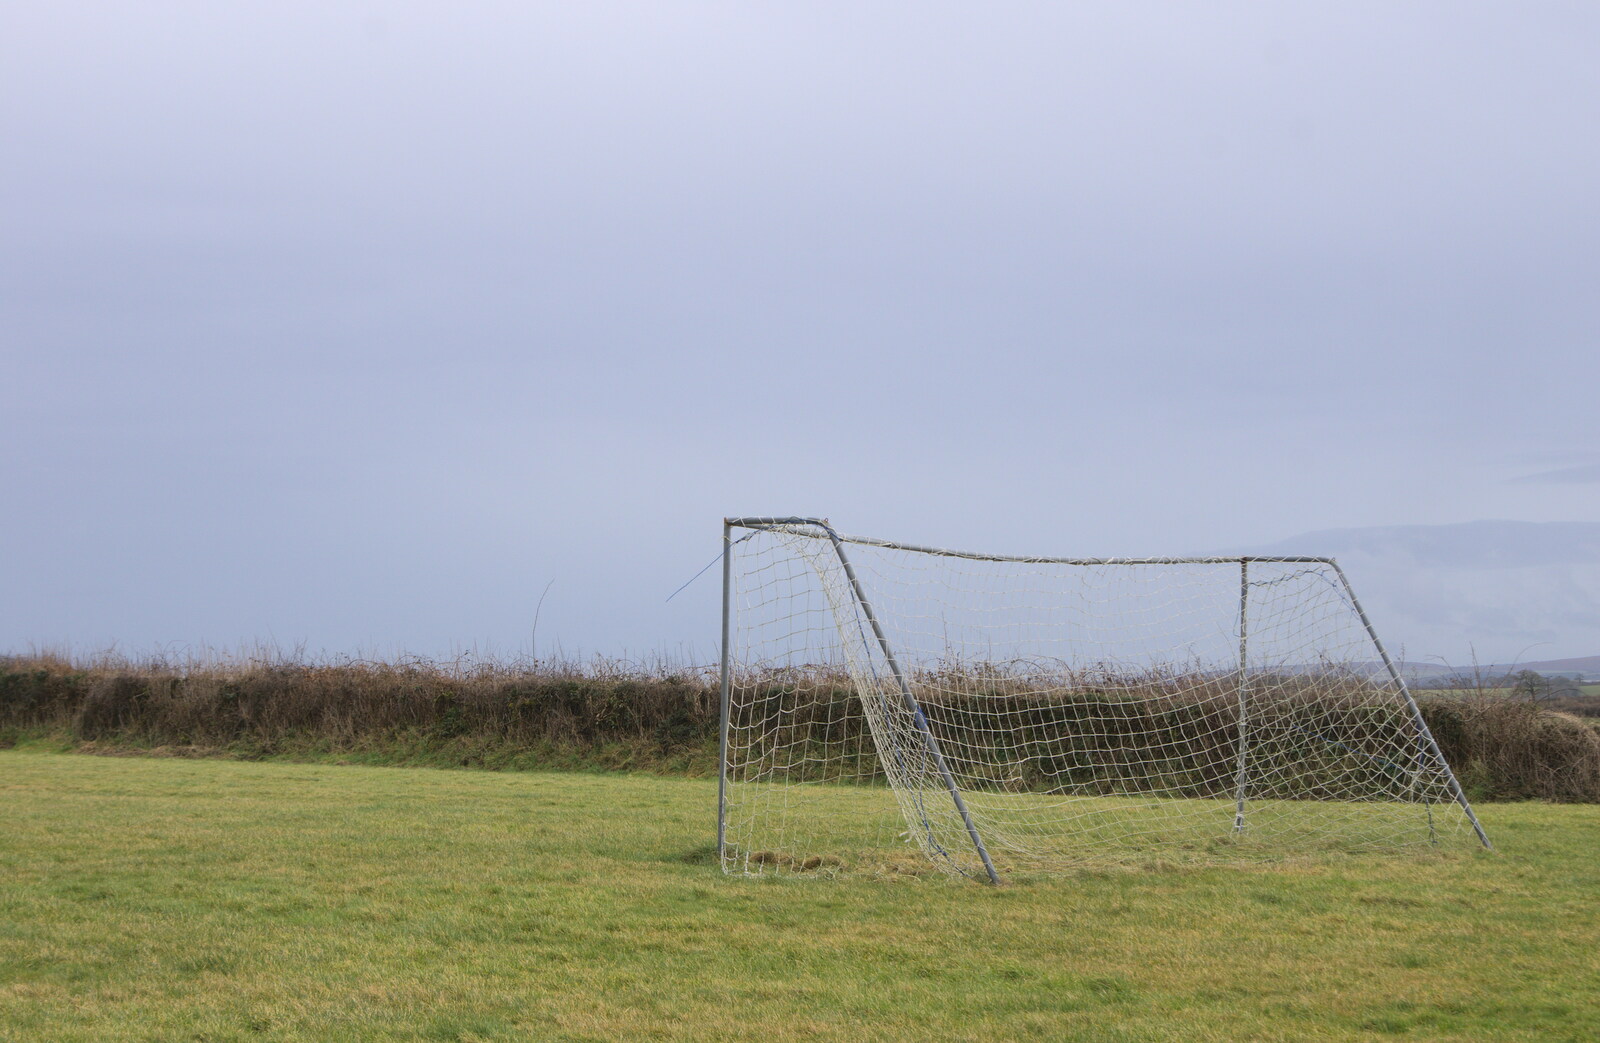 The playing field goal from A Trip to Grandma J's, Spreyton, Devon - 18th February 2015